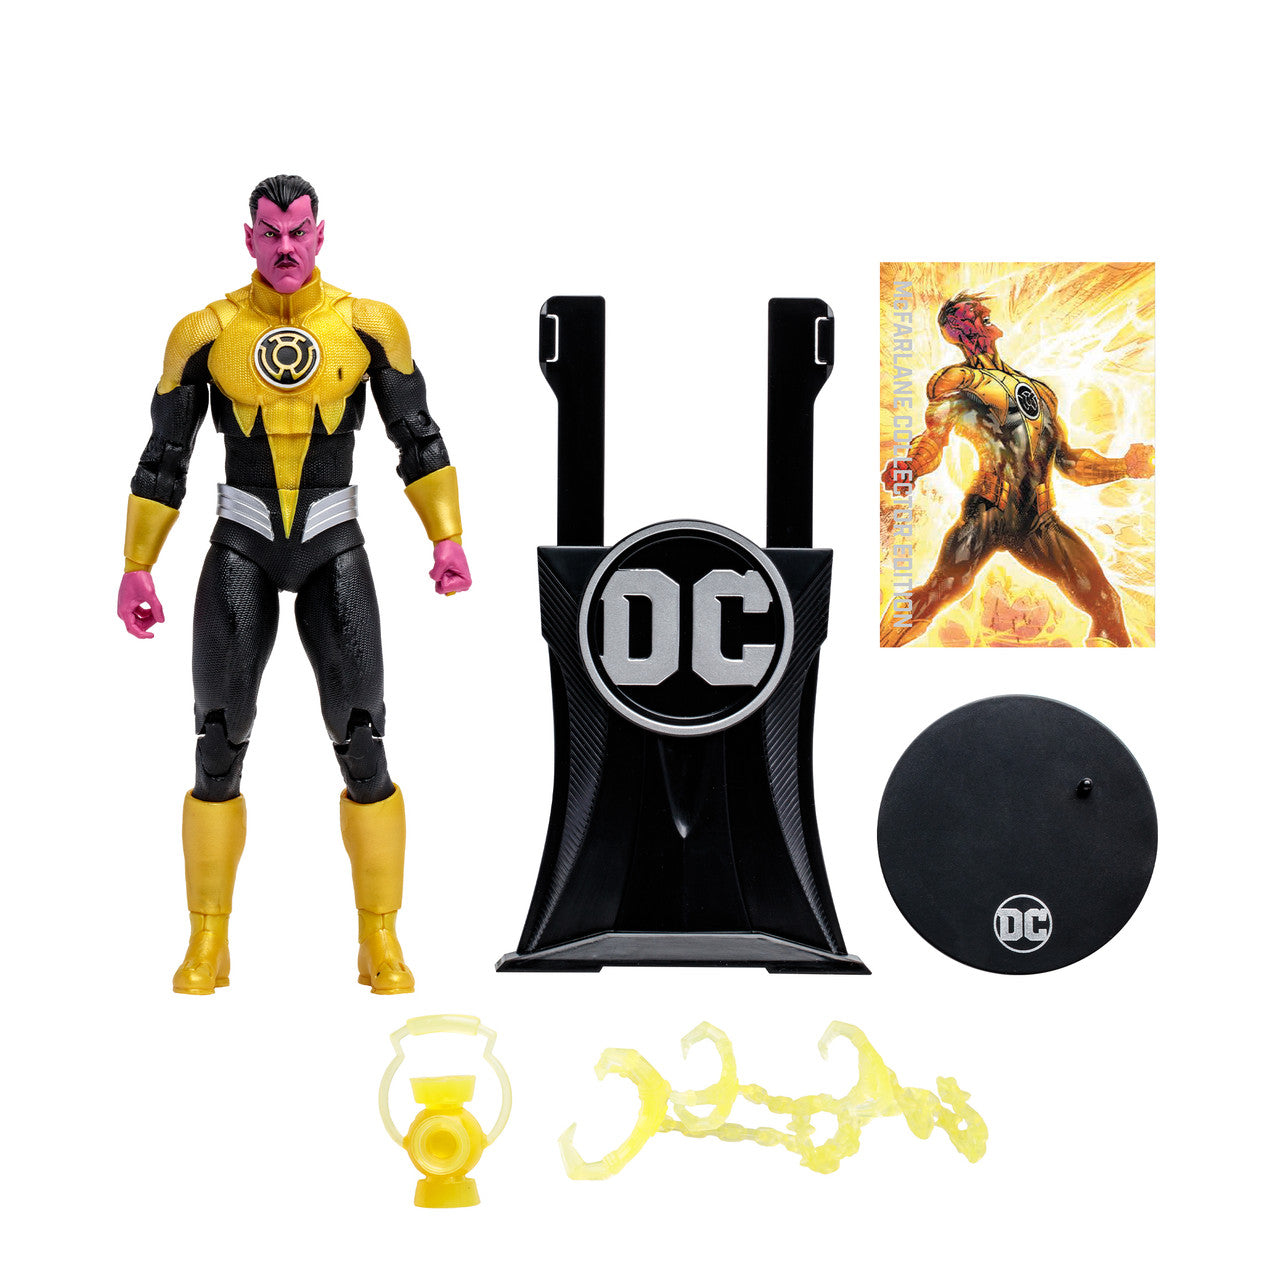 McFarlane Toys Sinestro (Sinestro Corps Wars) McFarlane Collector Edition 7" Figure